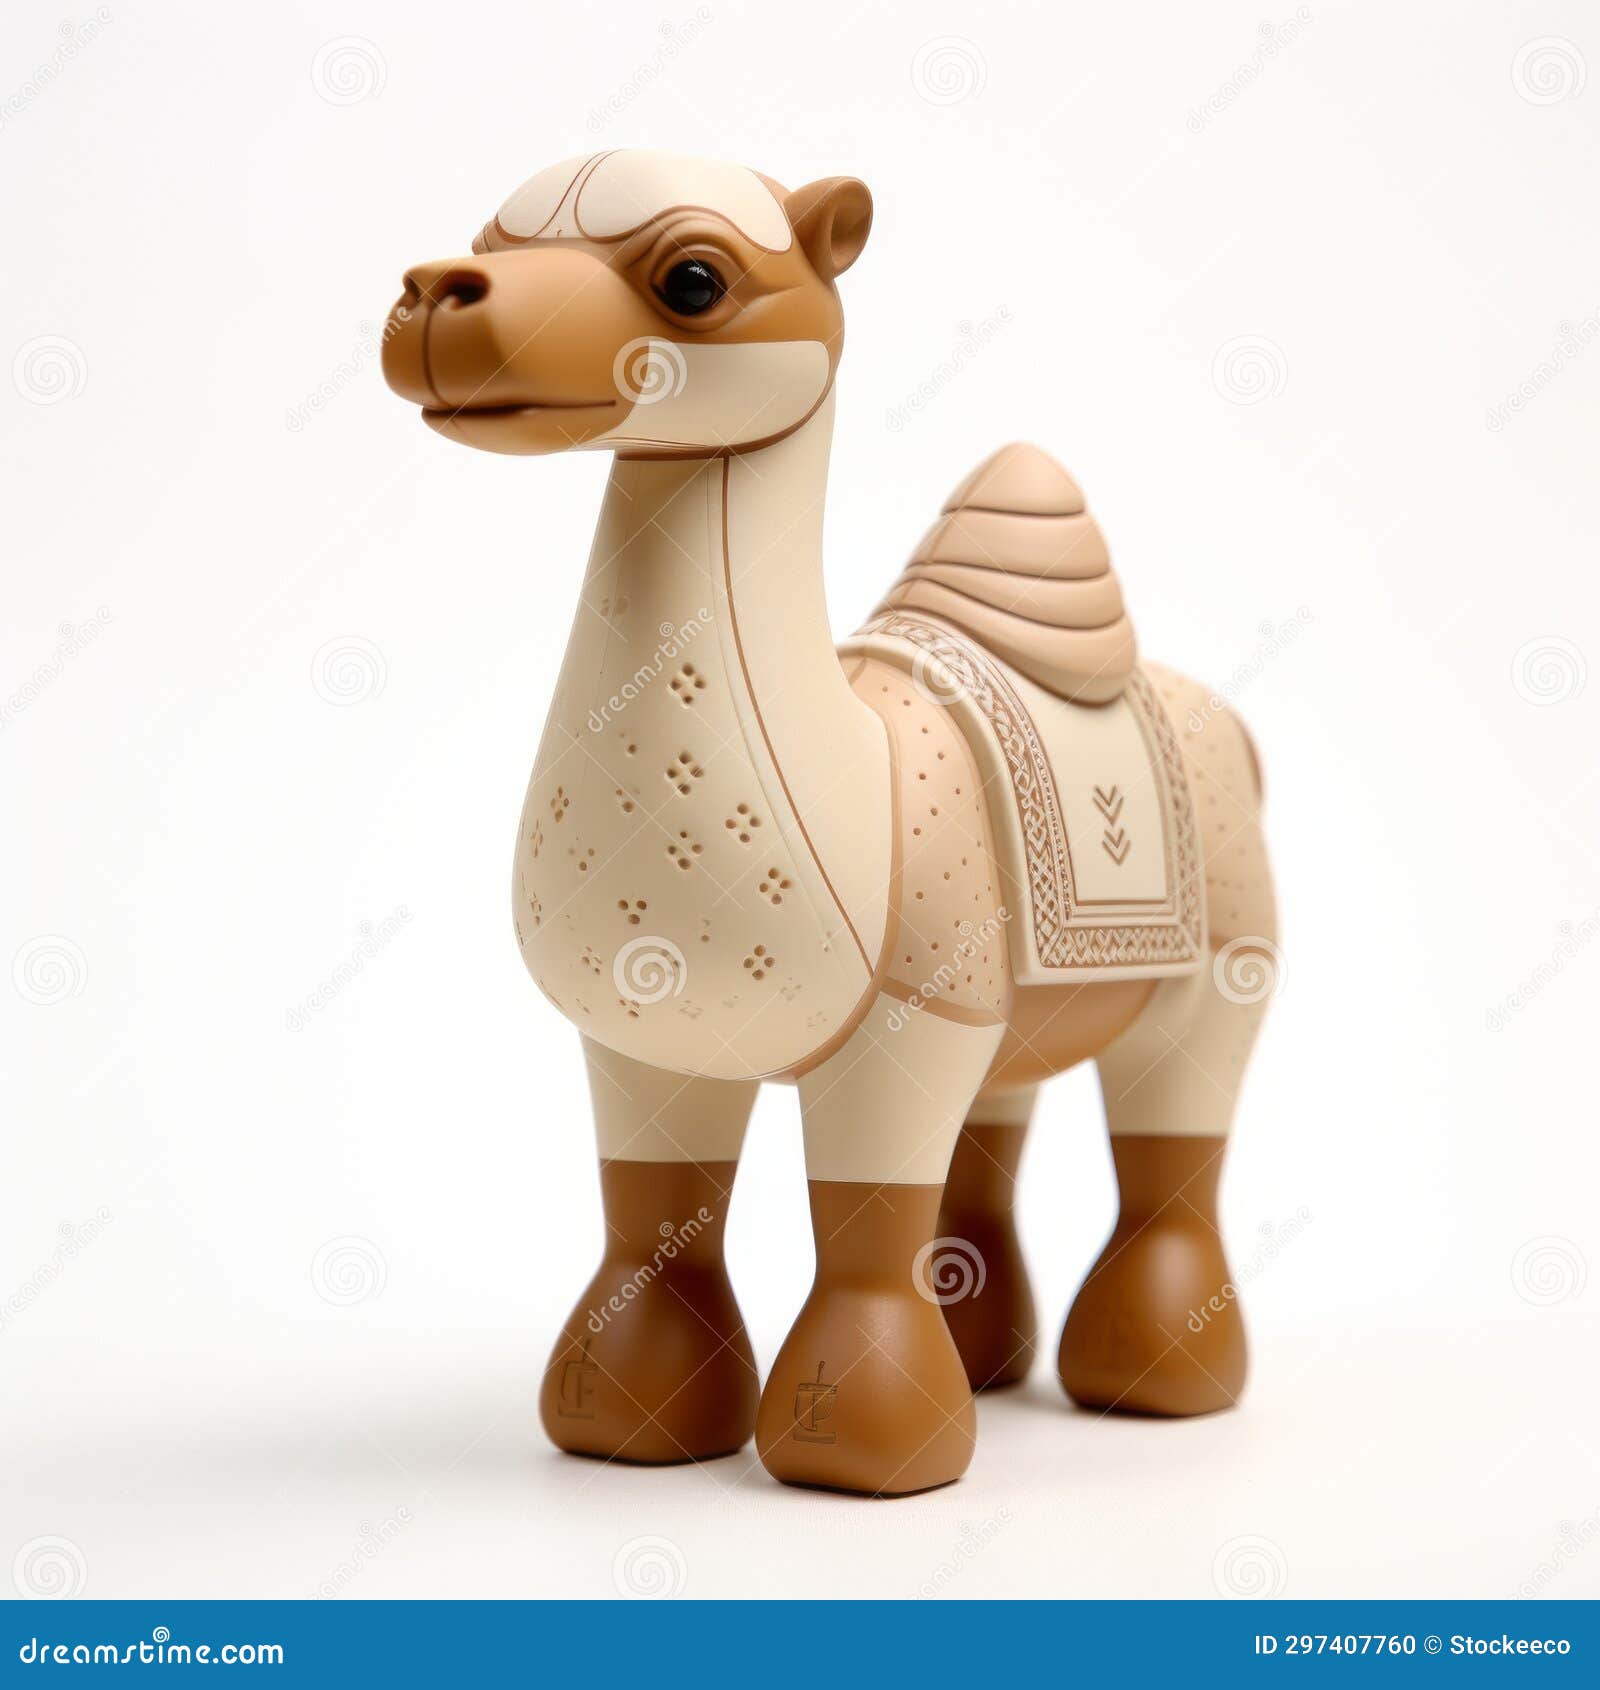 vinyl toy camel standing on white background